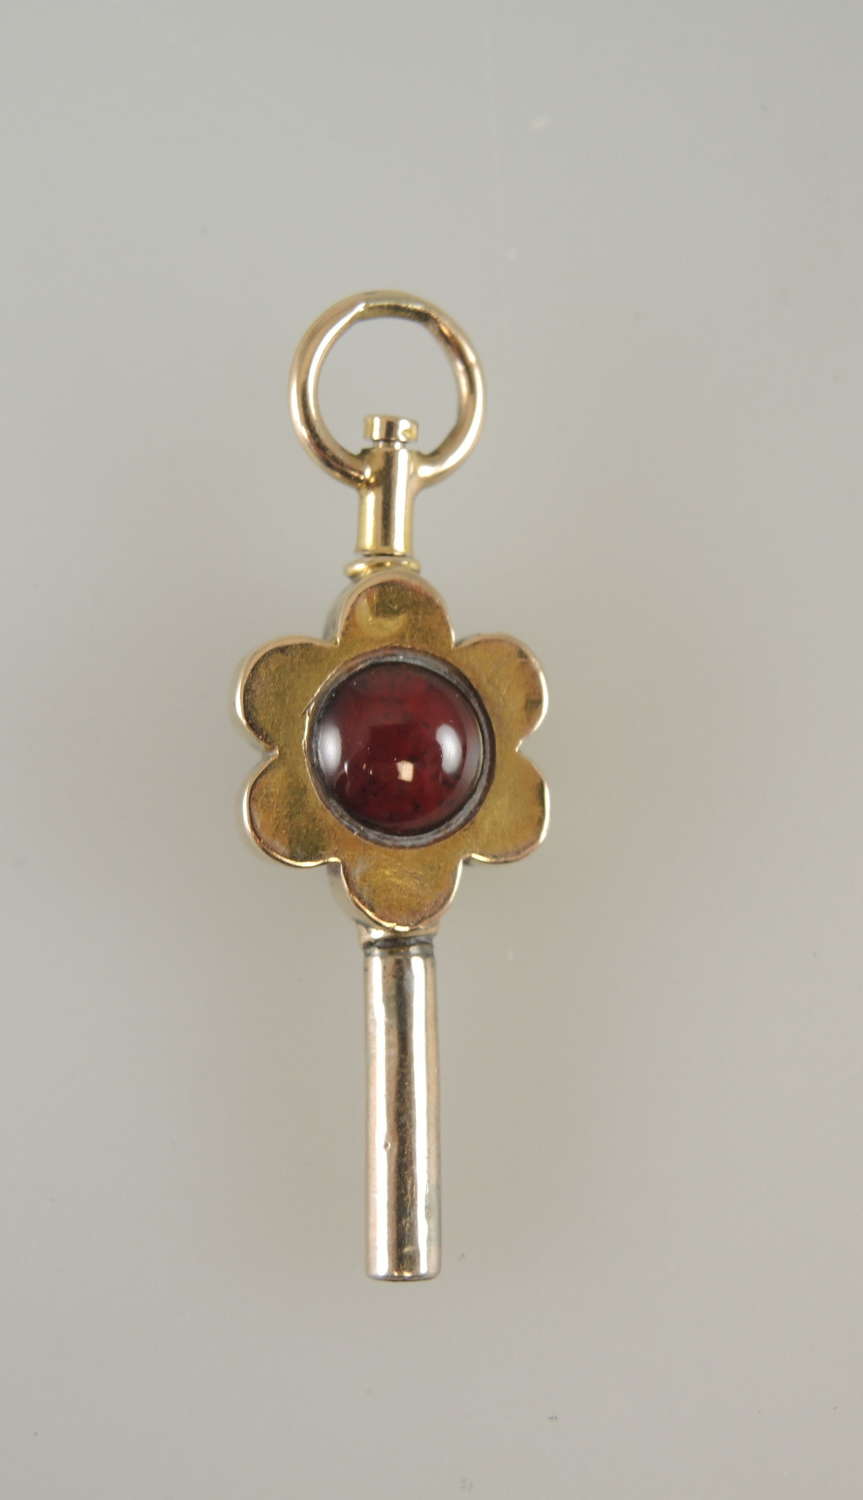 Gold Flower shaped pocket watch key c1850